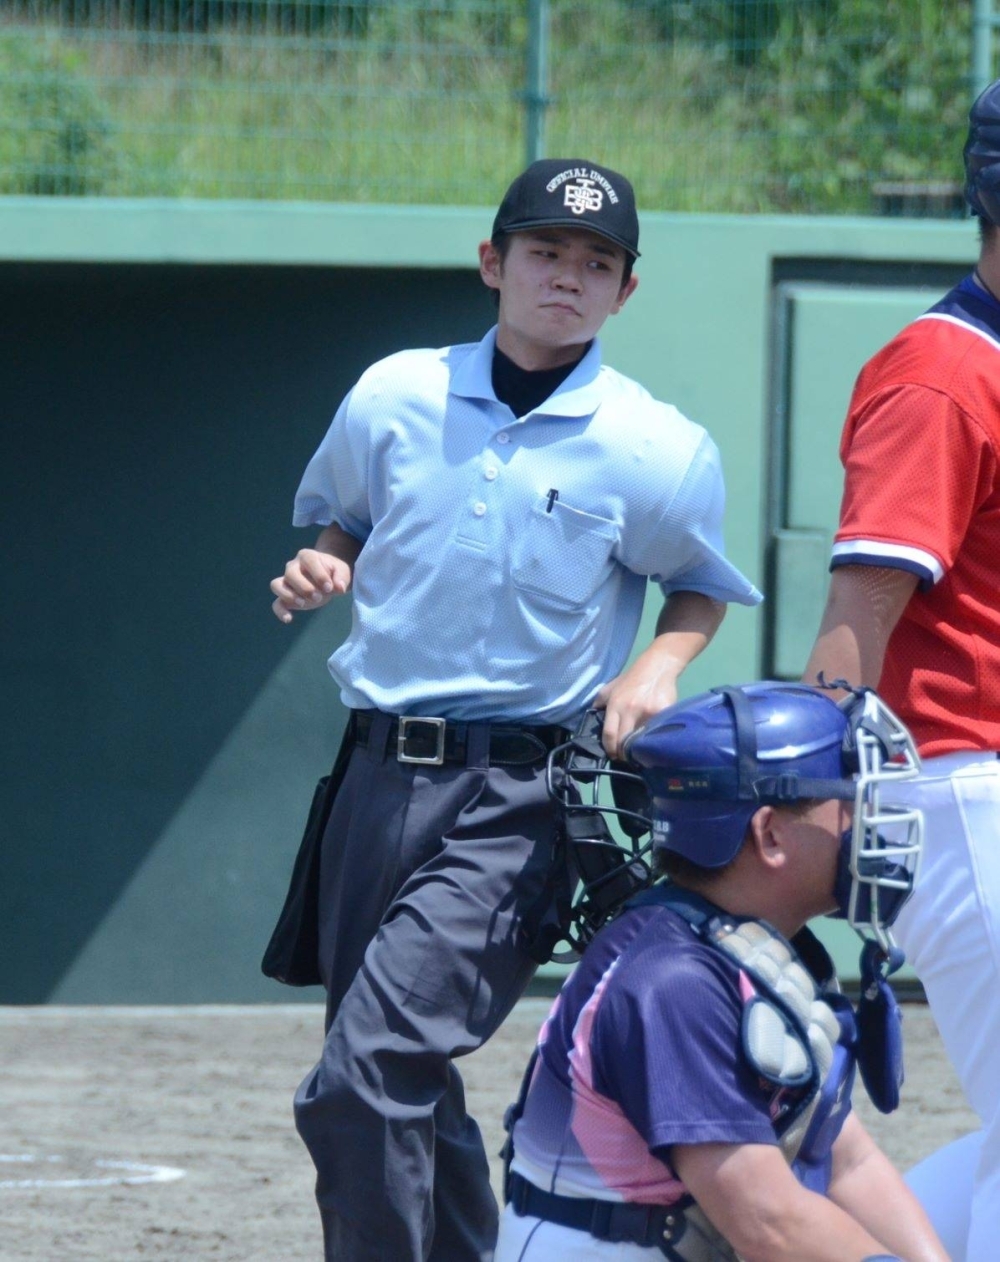 Ren Matsumoto, 18, serves as an umpire at a baseball game.